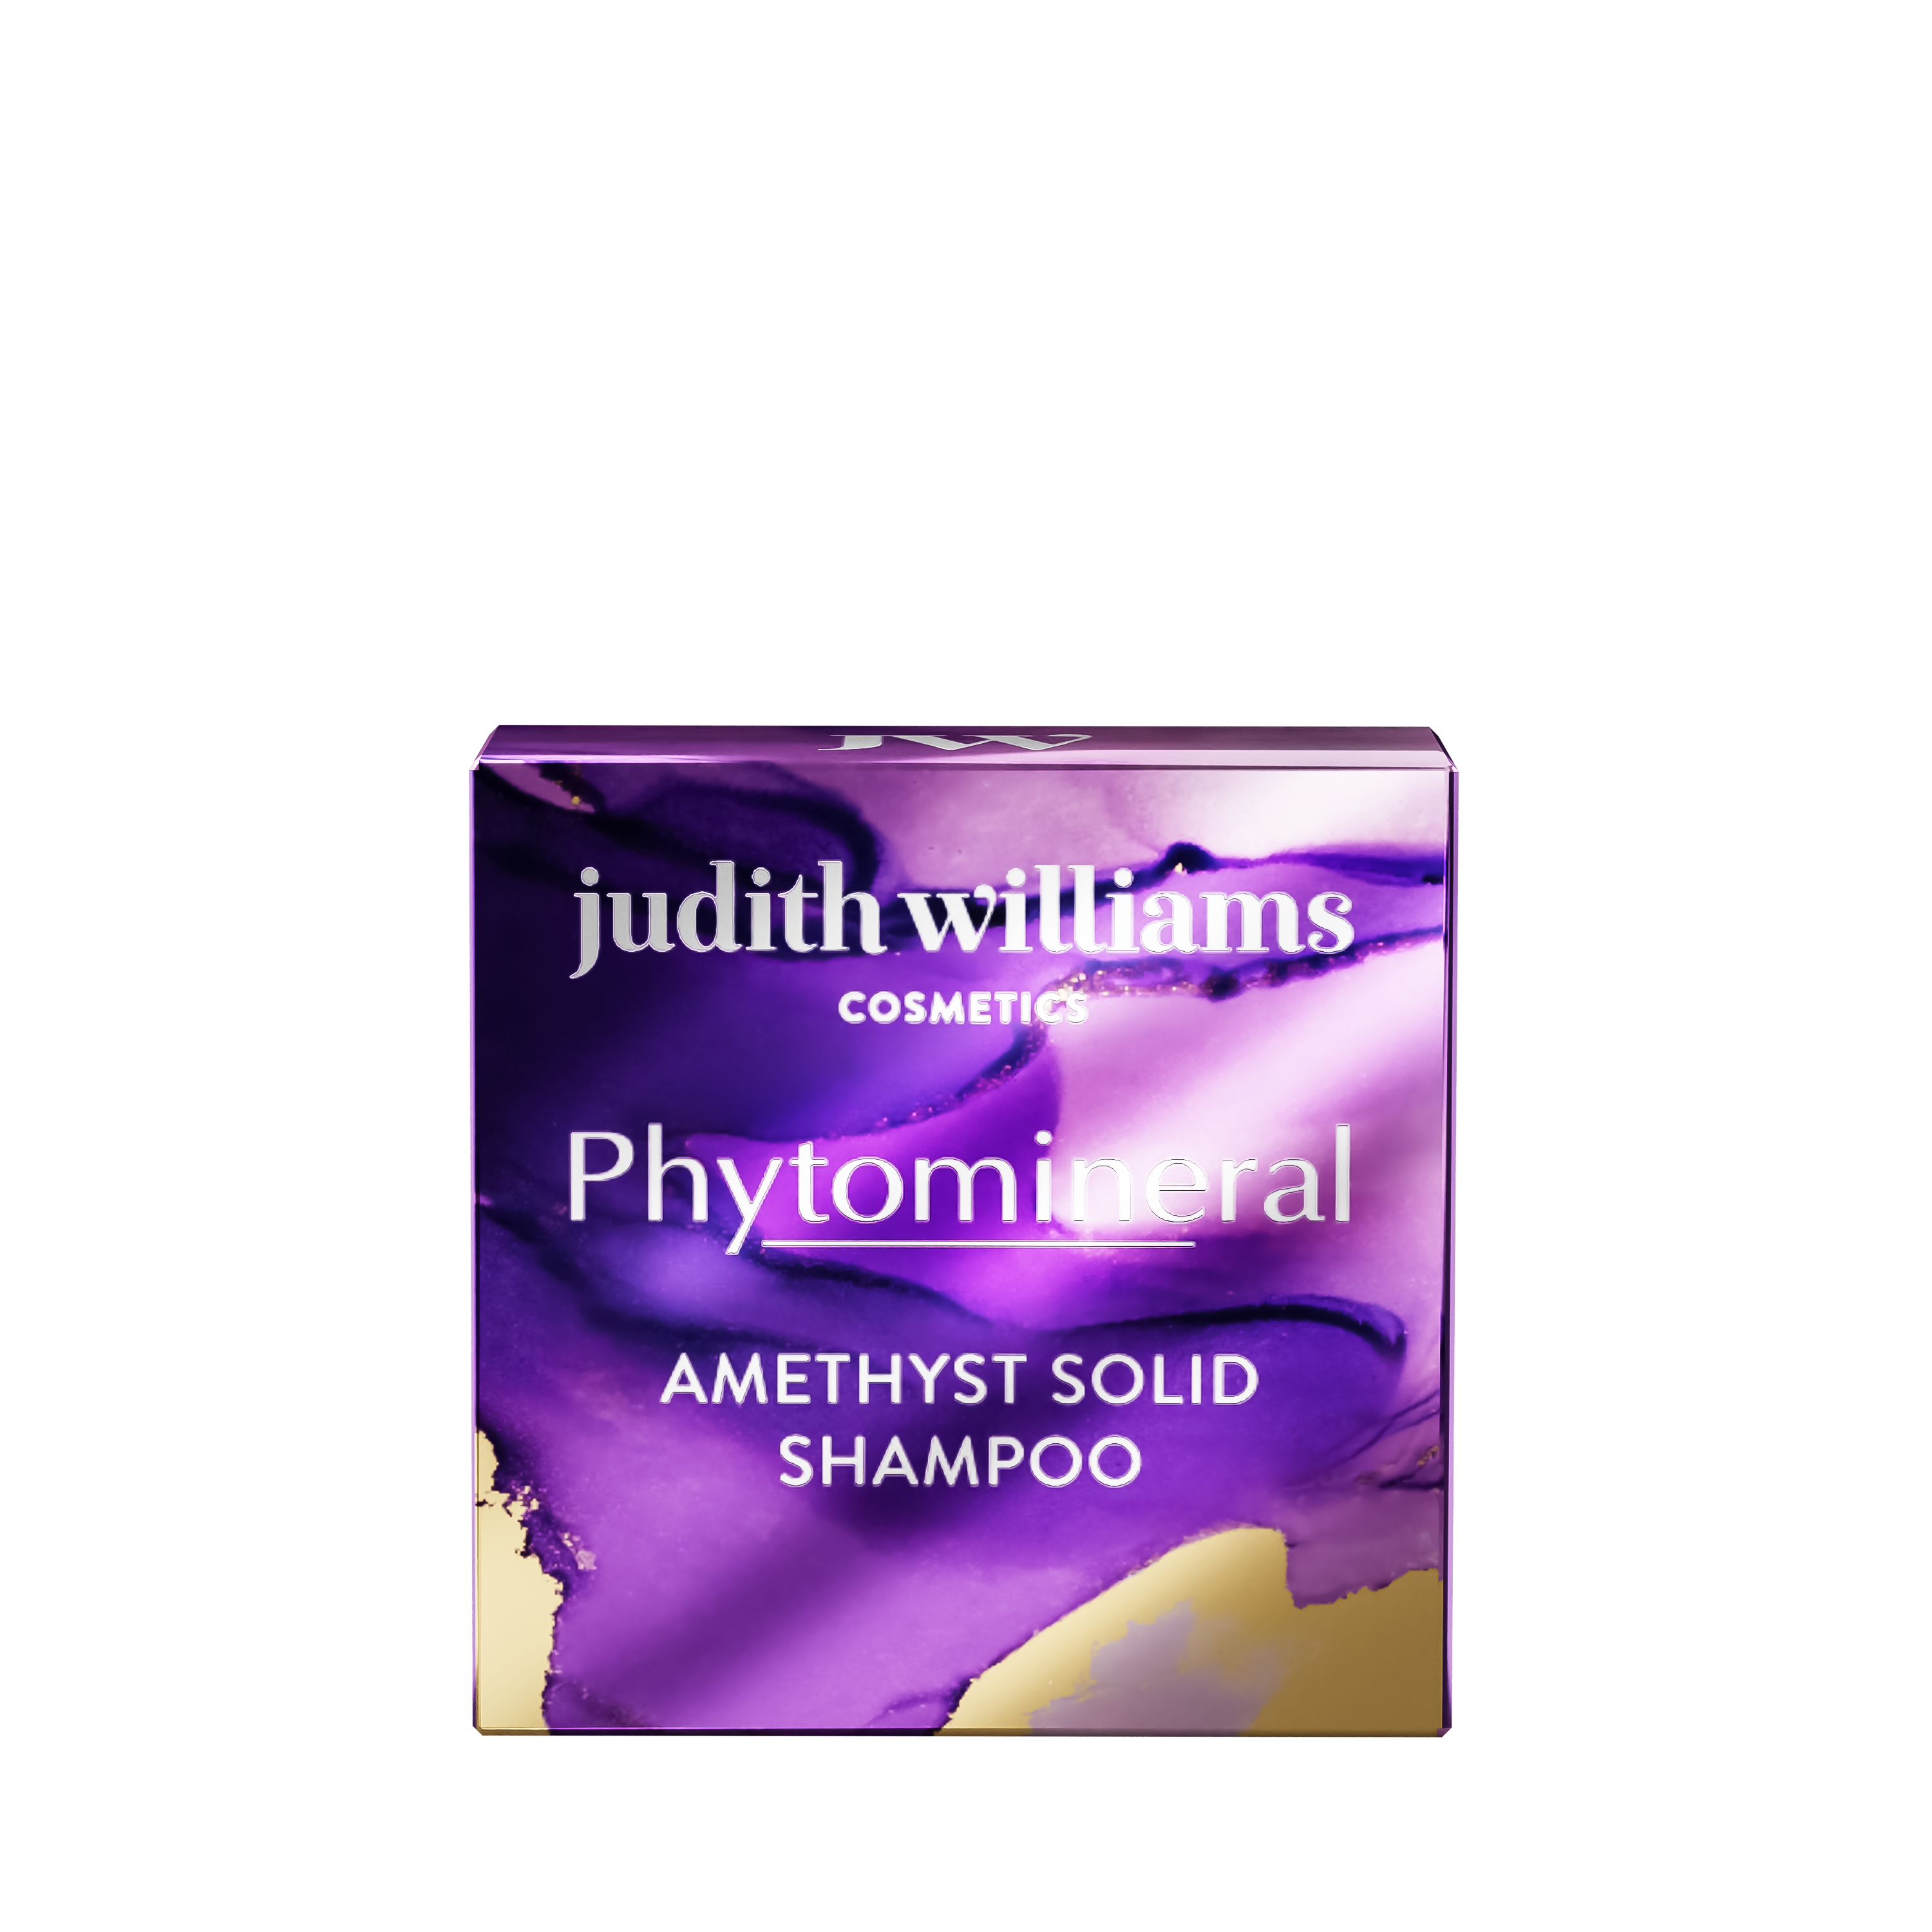 Shampoo | Phytomineral | Amethyst Solid Shampoo | Judith Williams